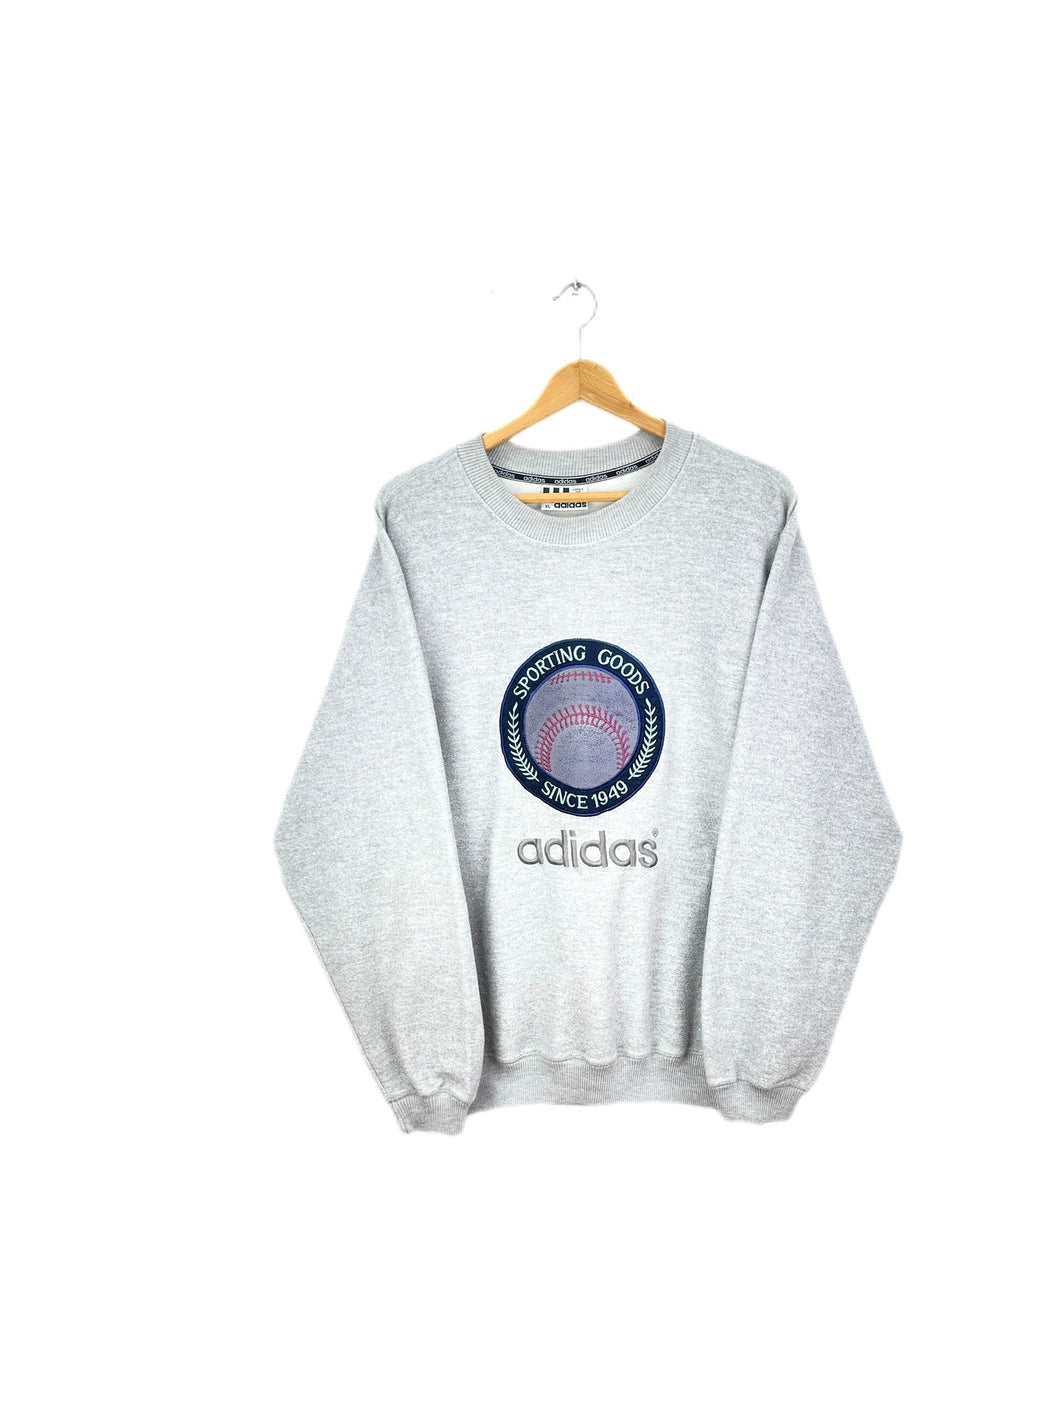 Adidas Velvet Sweatshirt - XLarge